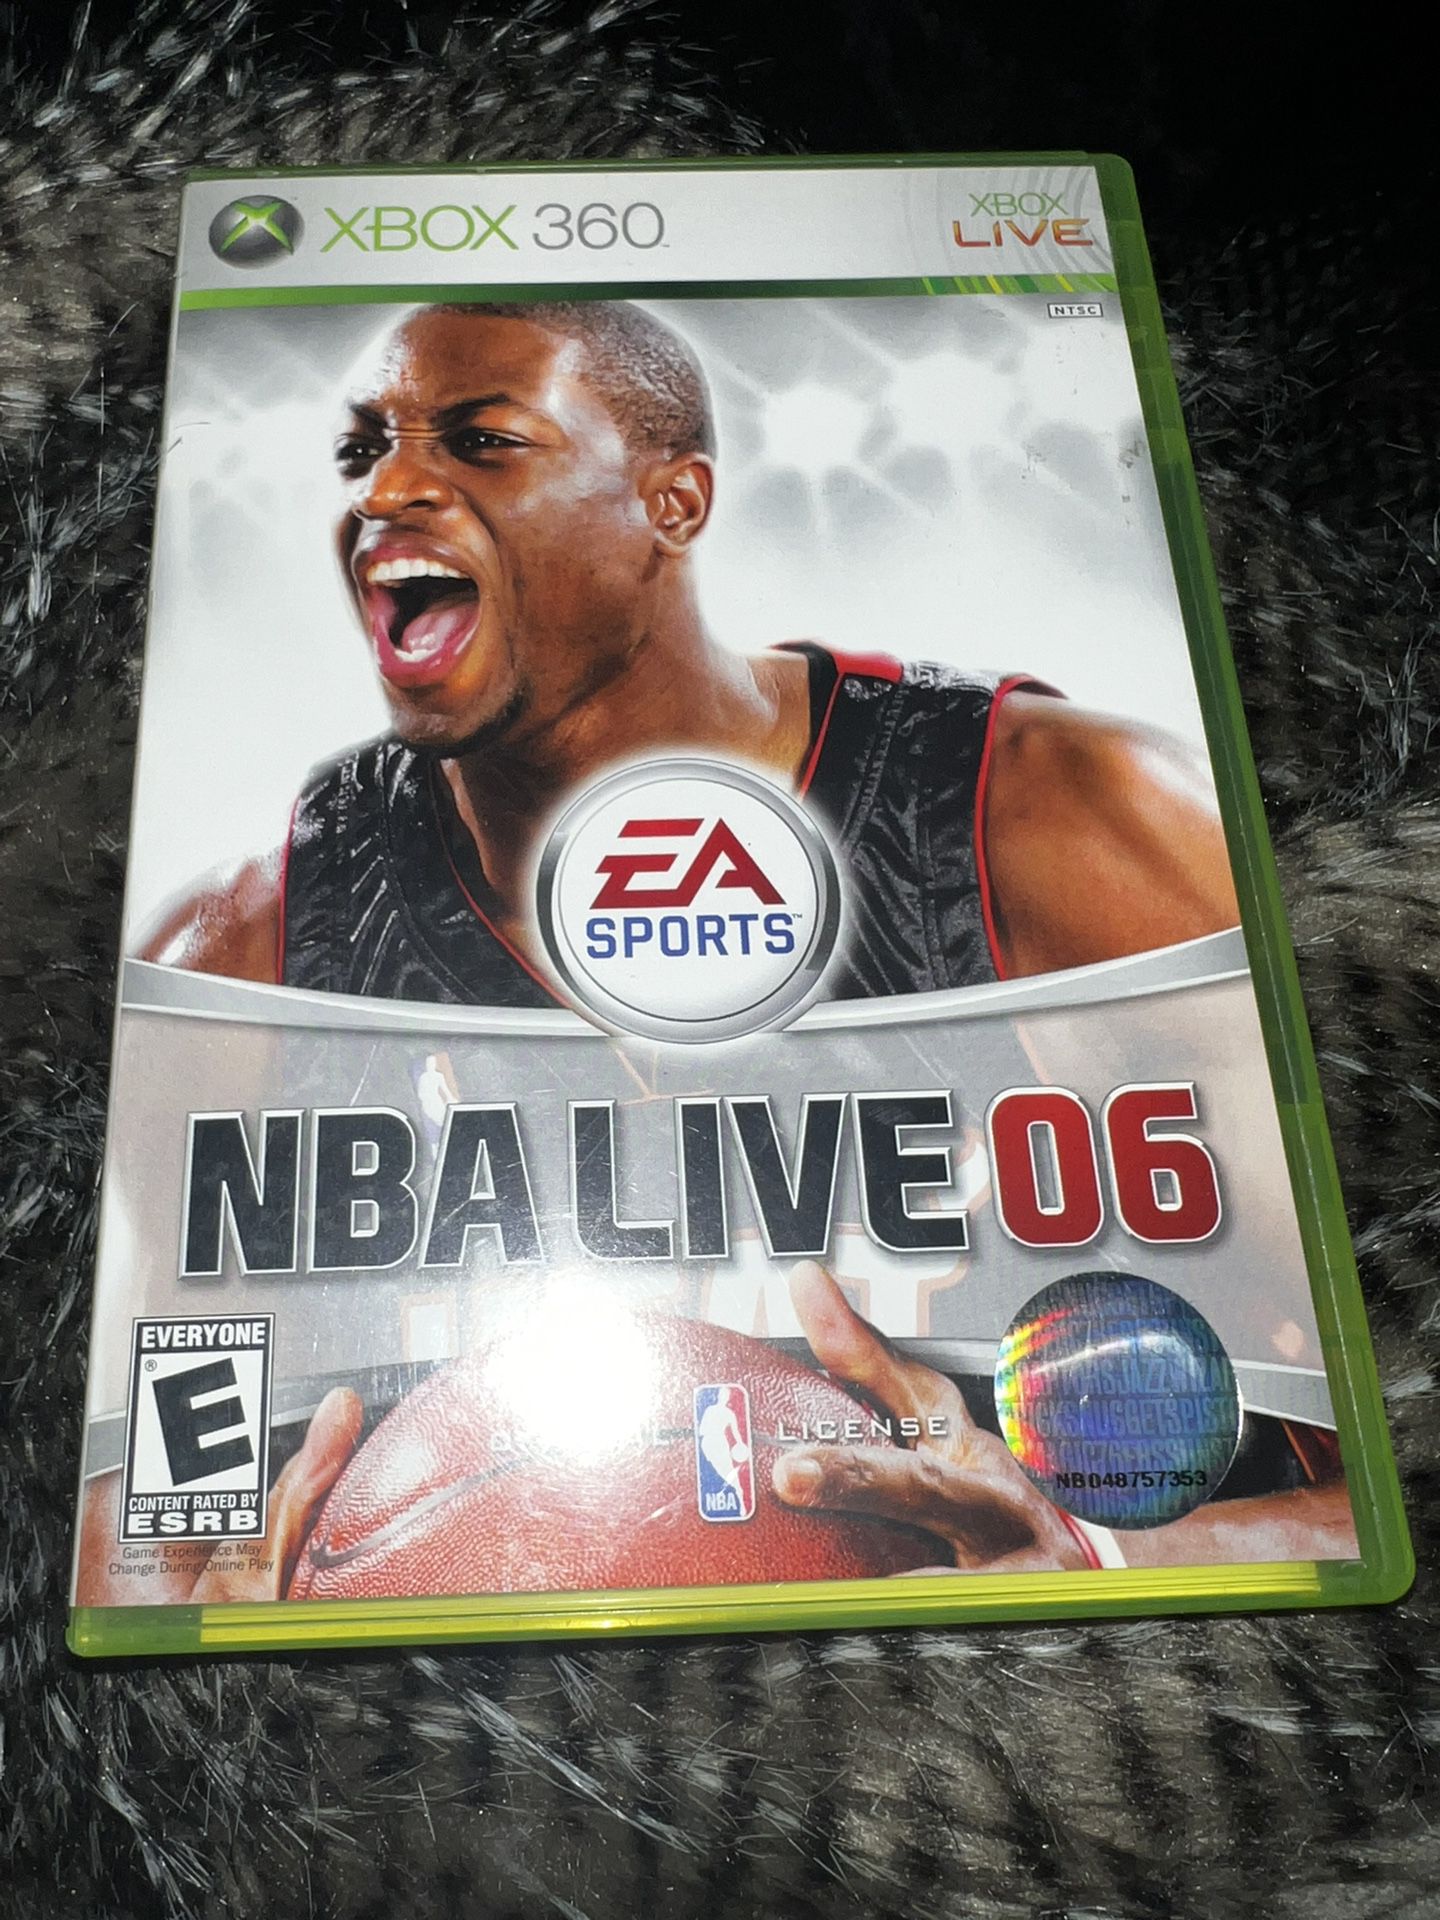 NBA Live 06 Microsoft XBOX 360 Video Game